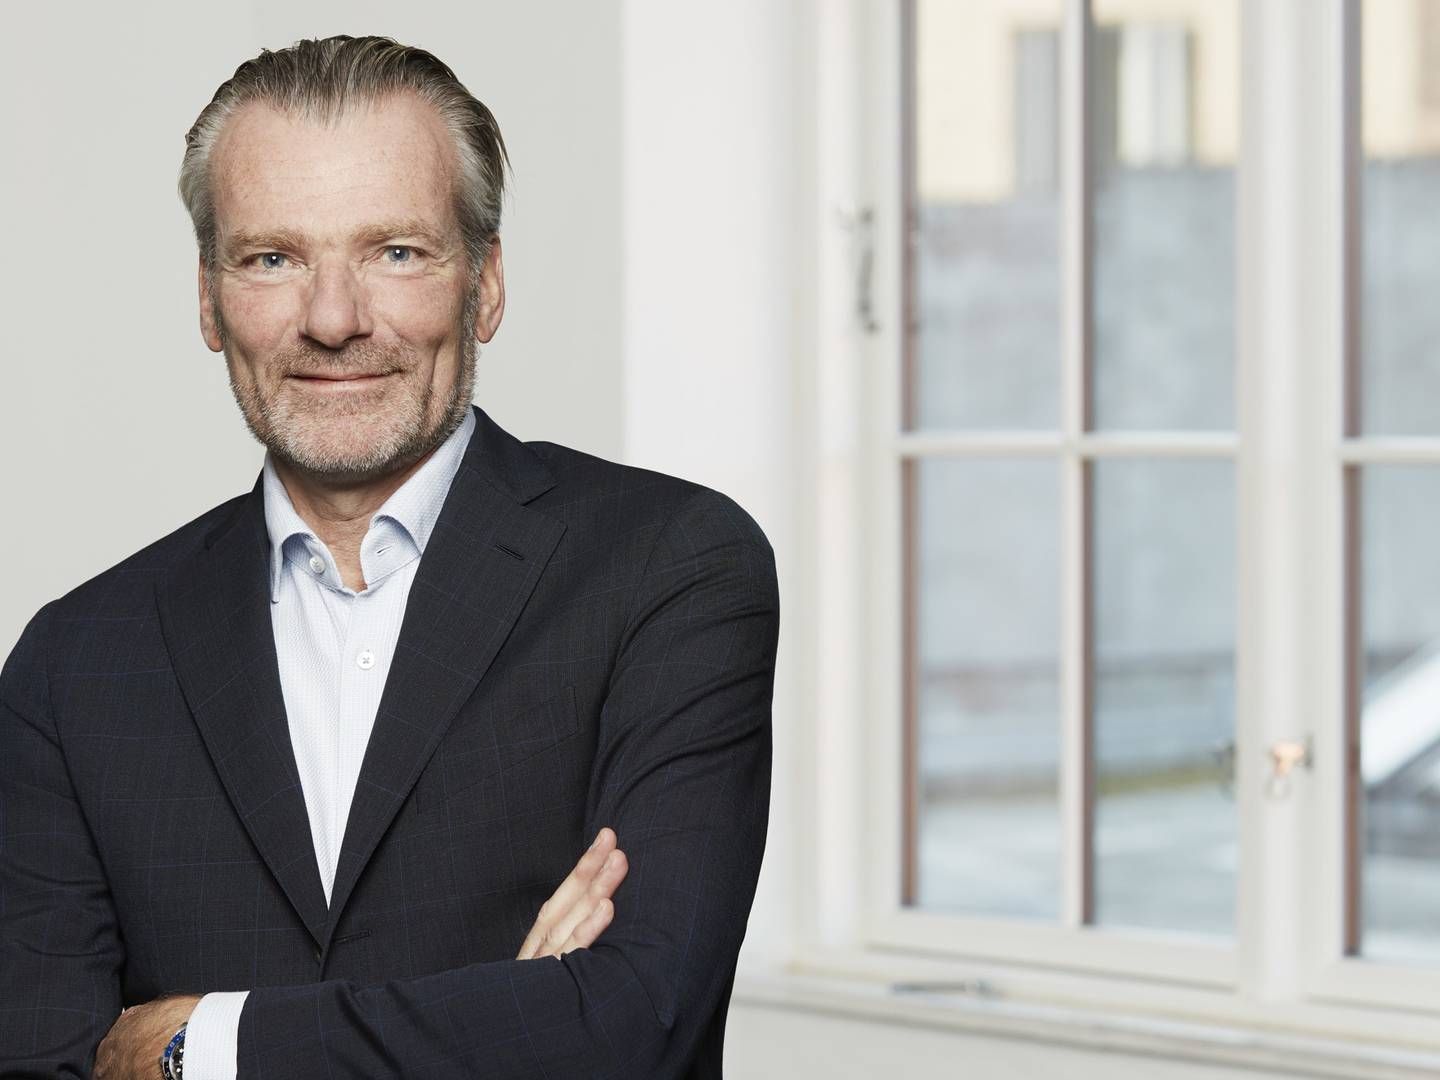 Peter Fogh stopper som formand for Advokatrådet. | Foto: Morten Holtum